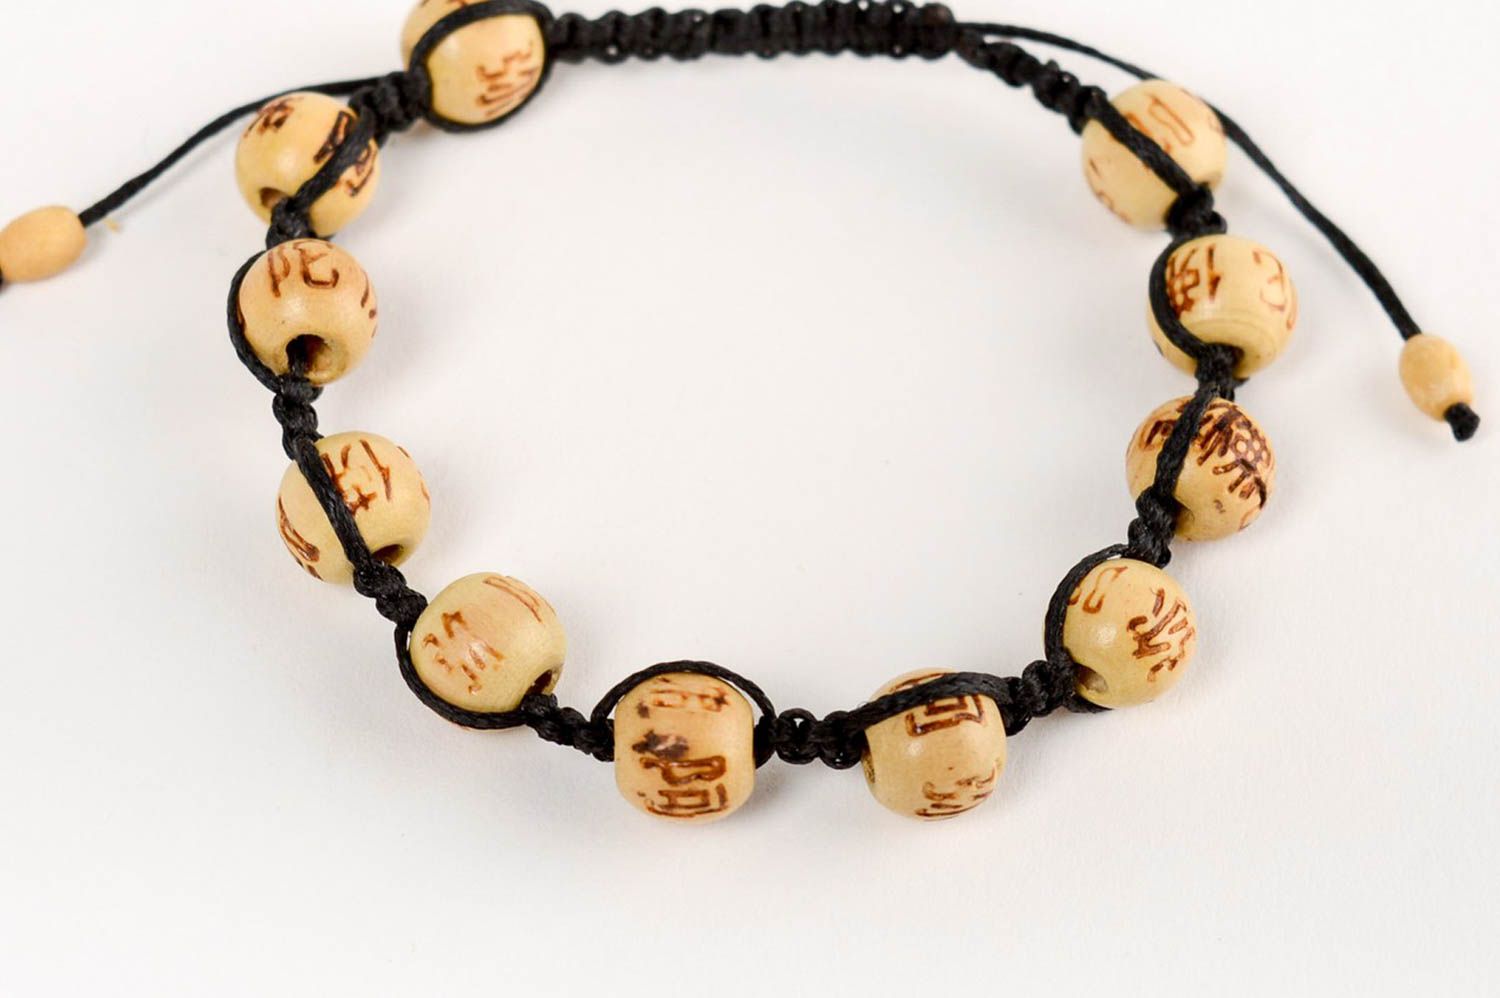 Handmade designer wrist bracelet woven of cord and wooden beads unisex photo 4